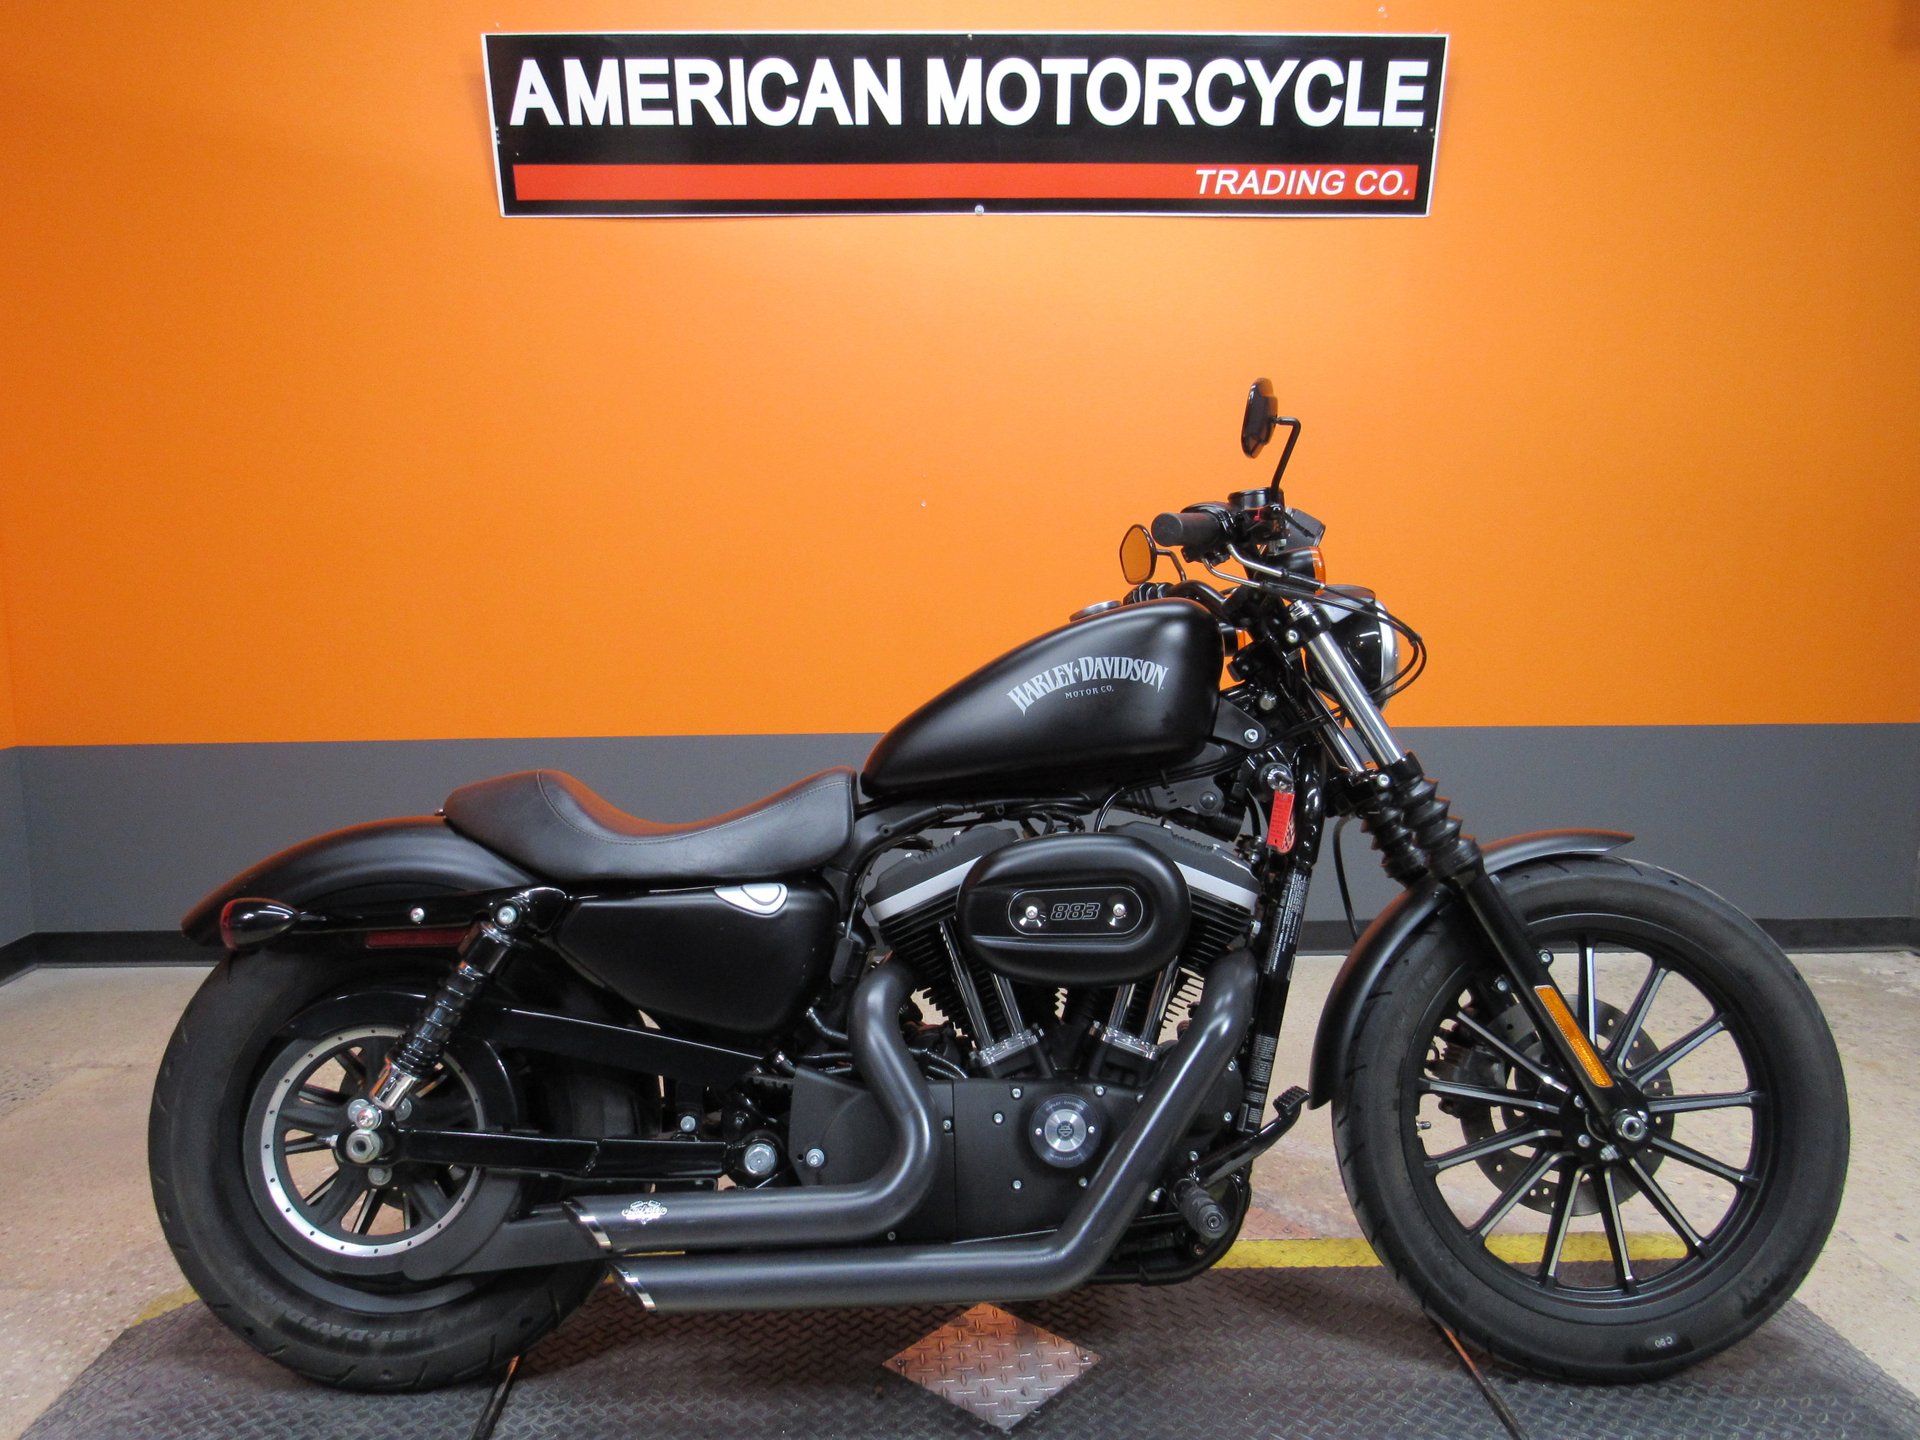 2013 Harley Davidson Sportster 883 American Motorcycle Trading Company Used Harley Davidson Motorcycles